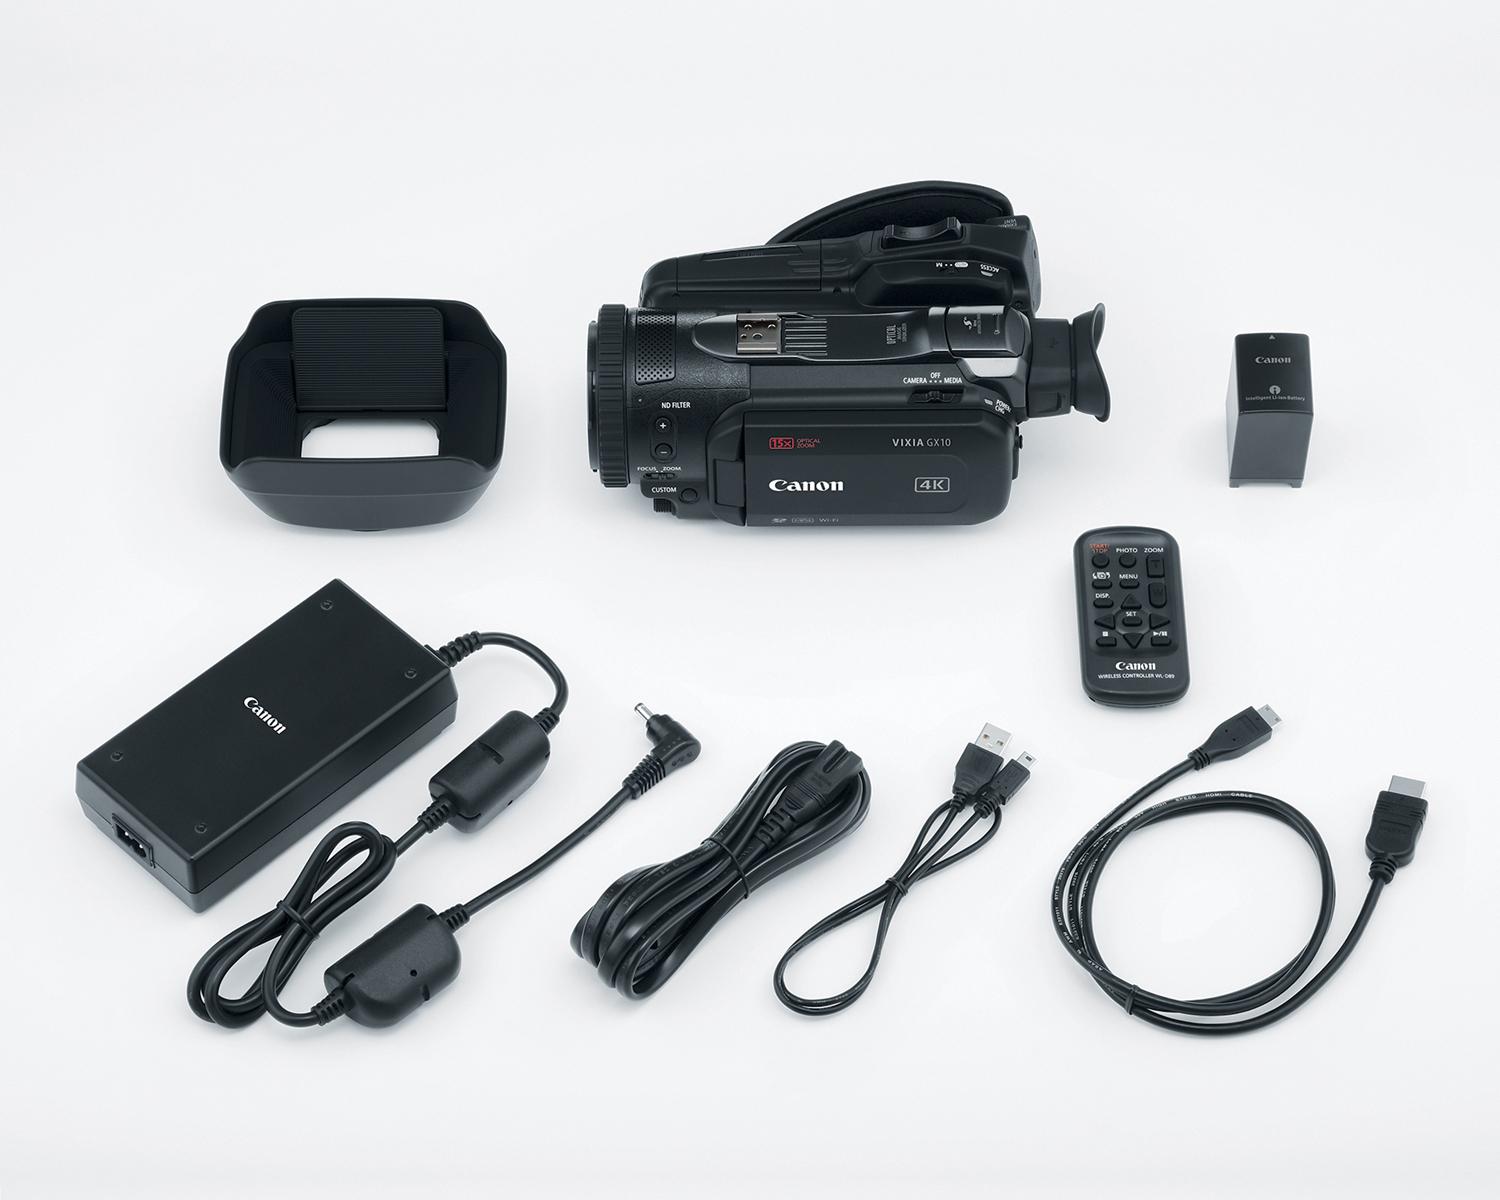 Canon VIXIA GX10 4K UHD Camcorder - Kit